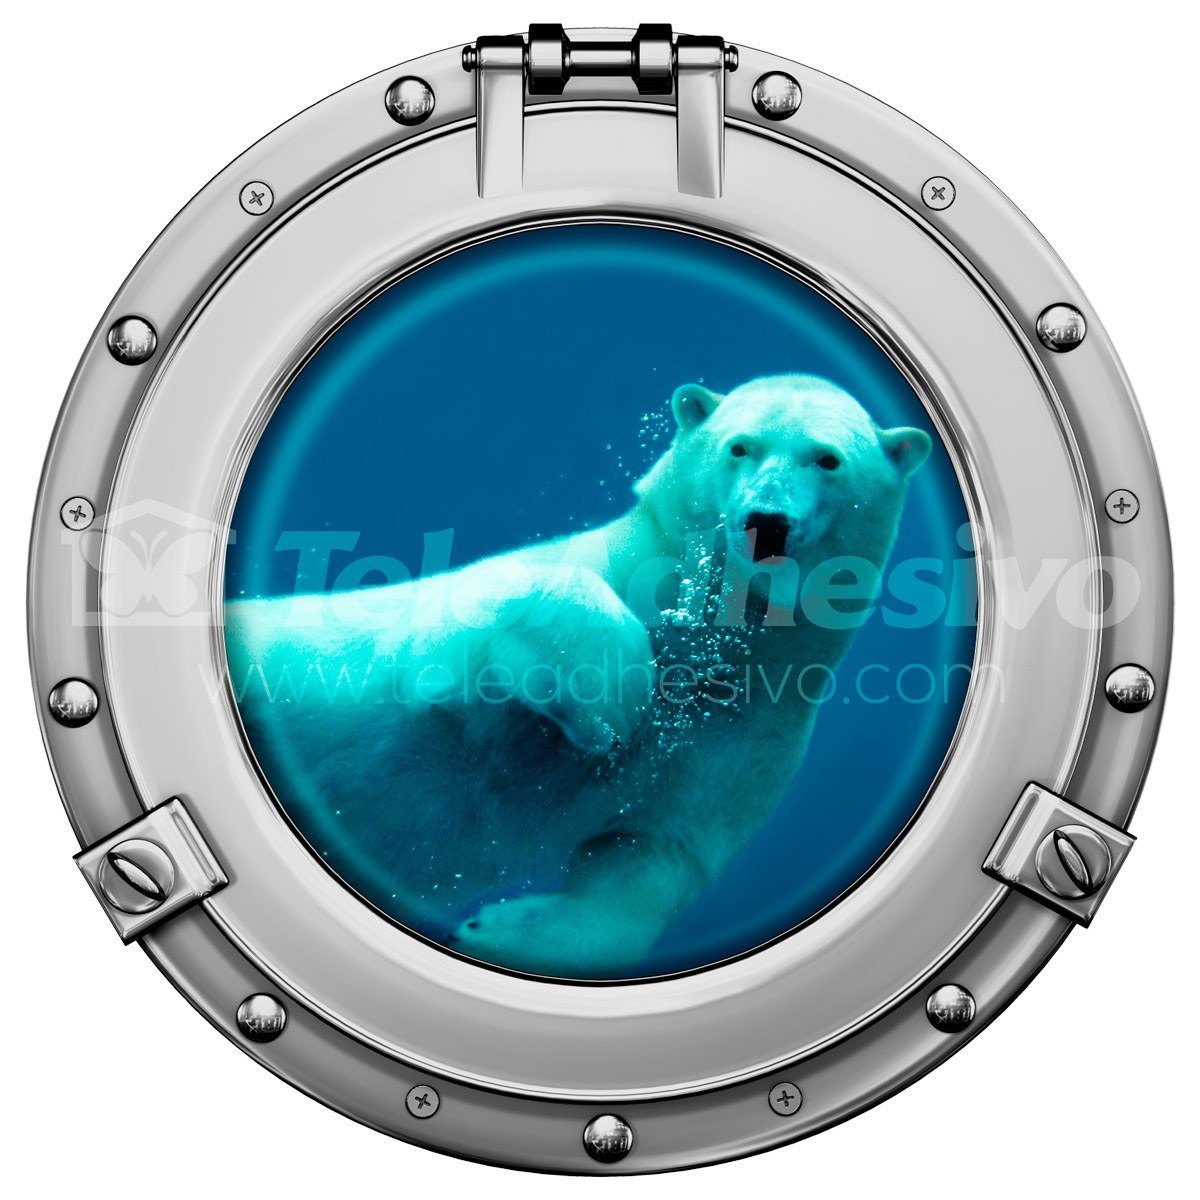 Wall Stickers: Polar bear swimming